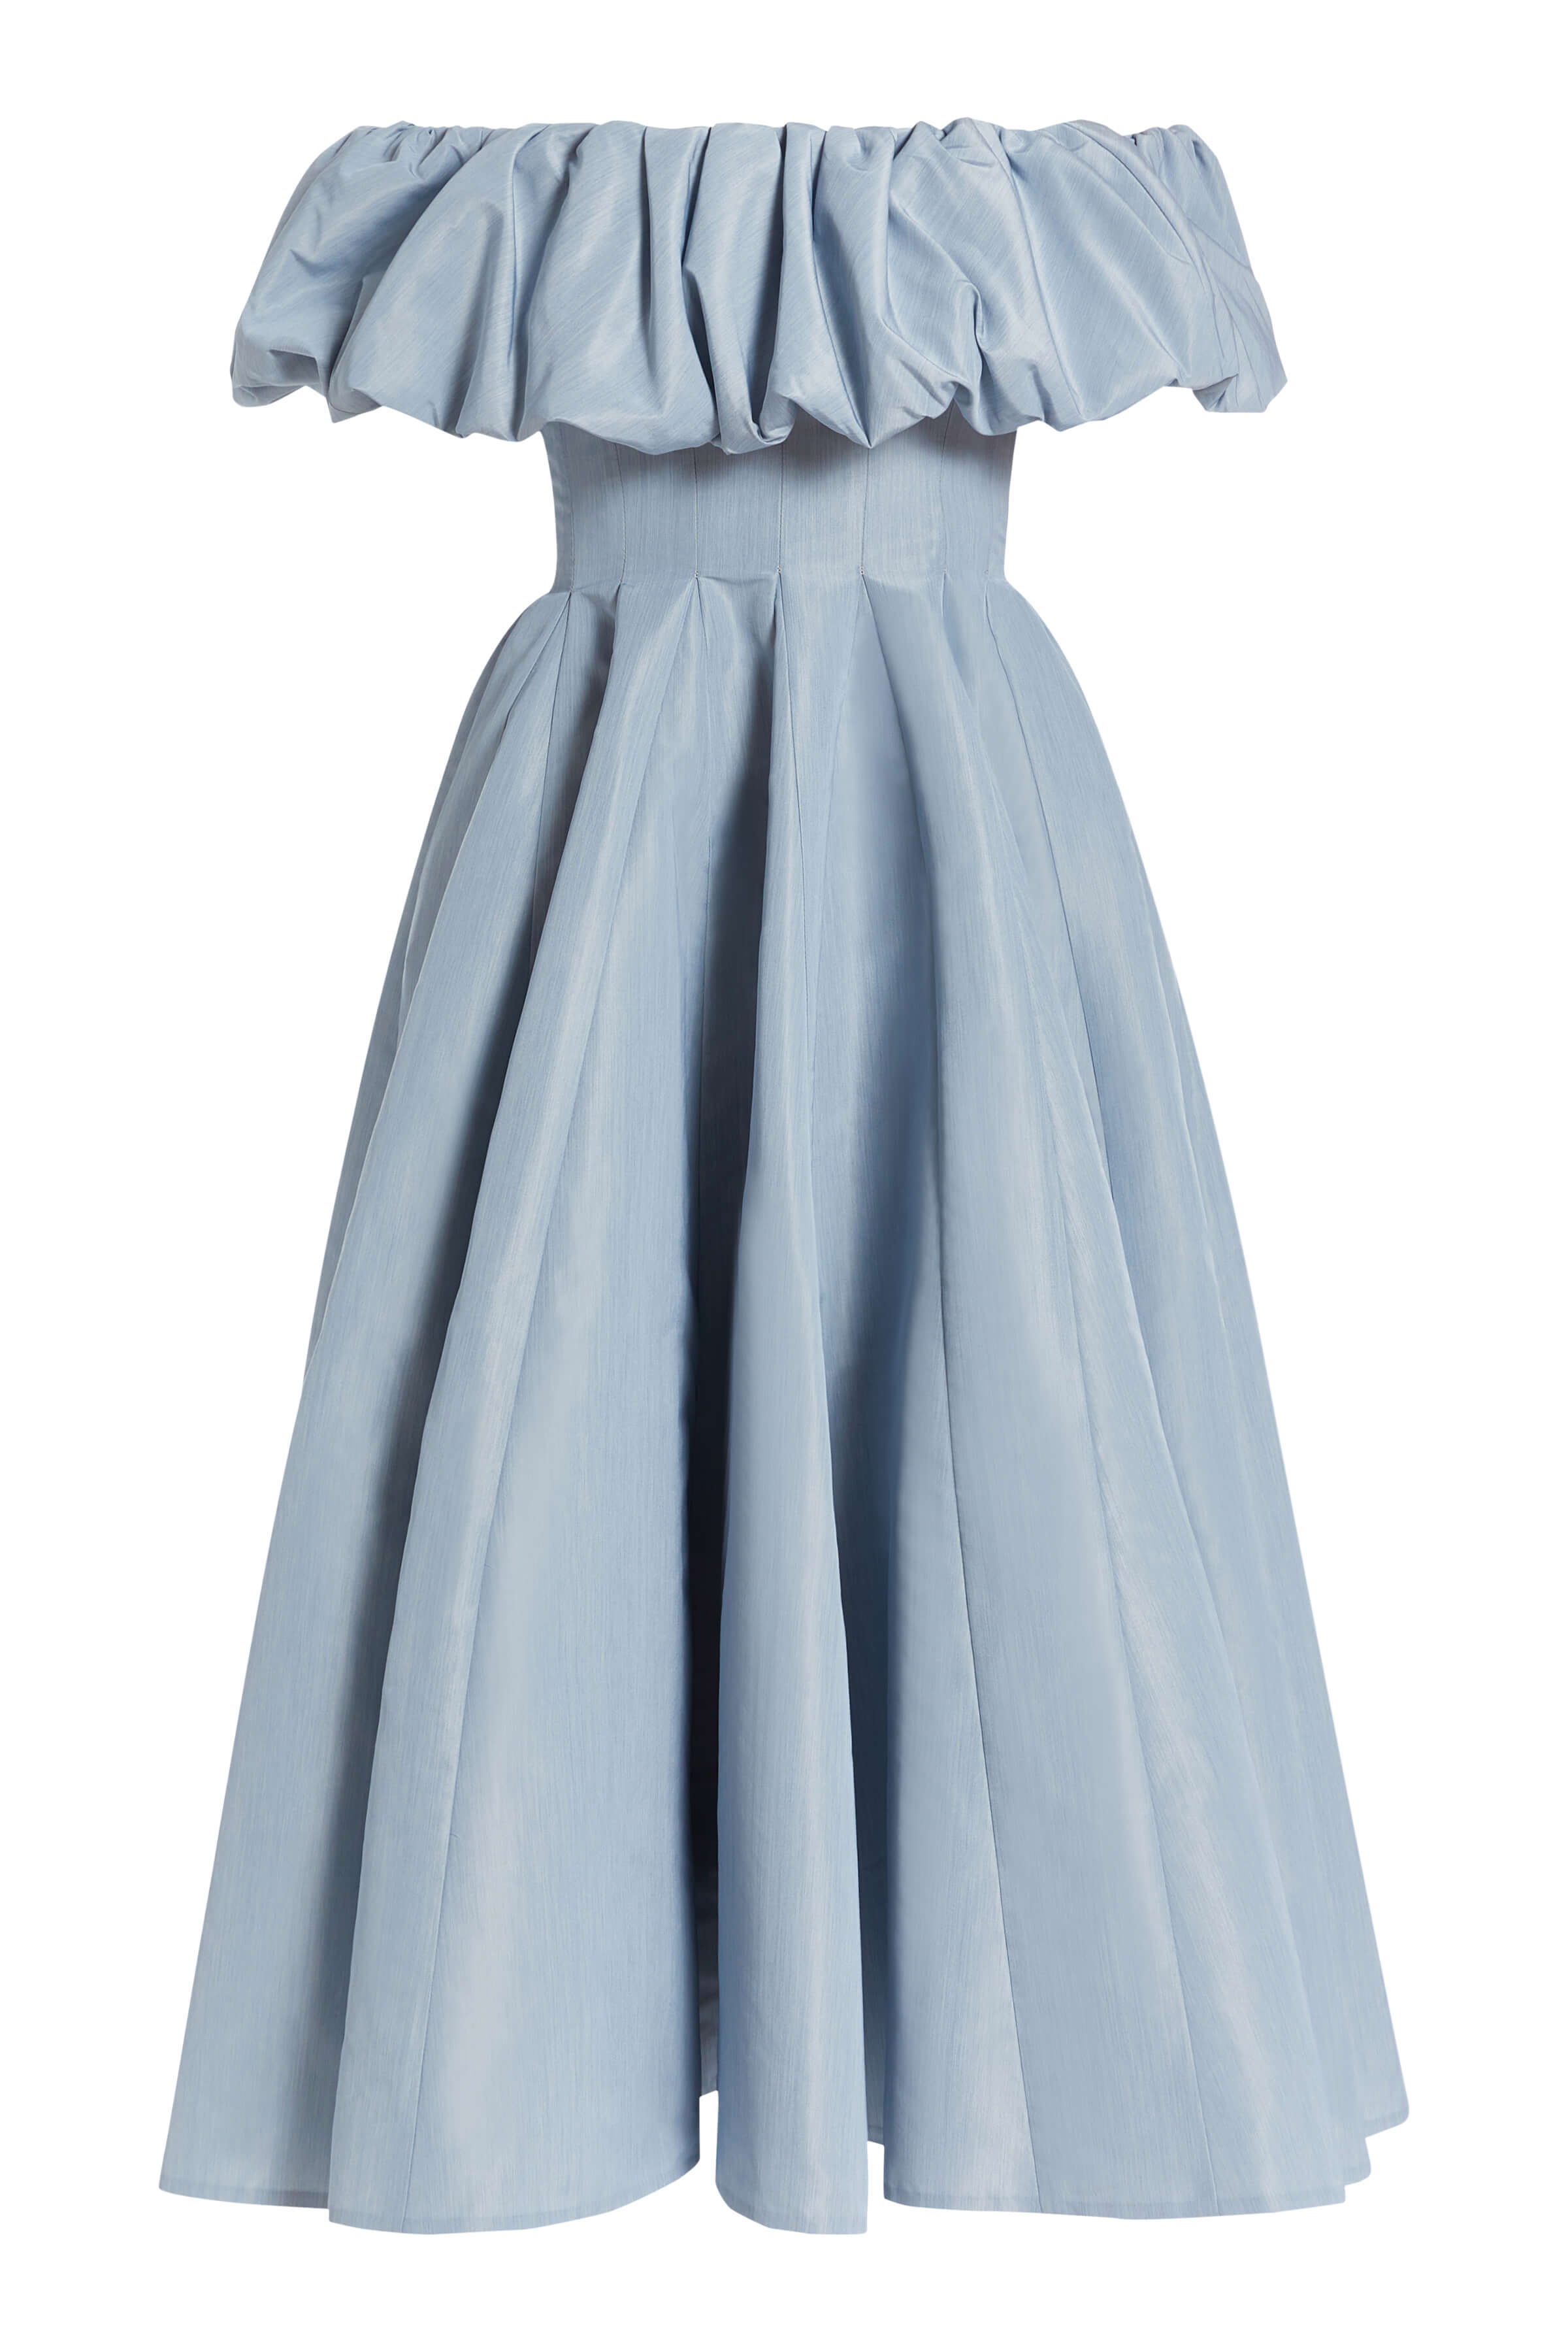 Marlowe Blue Taffeta Ruffled Off-The-Shoulder Midi Dress